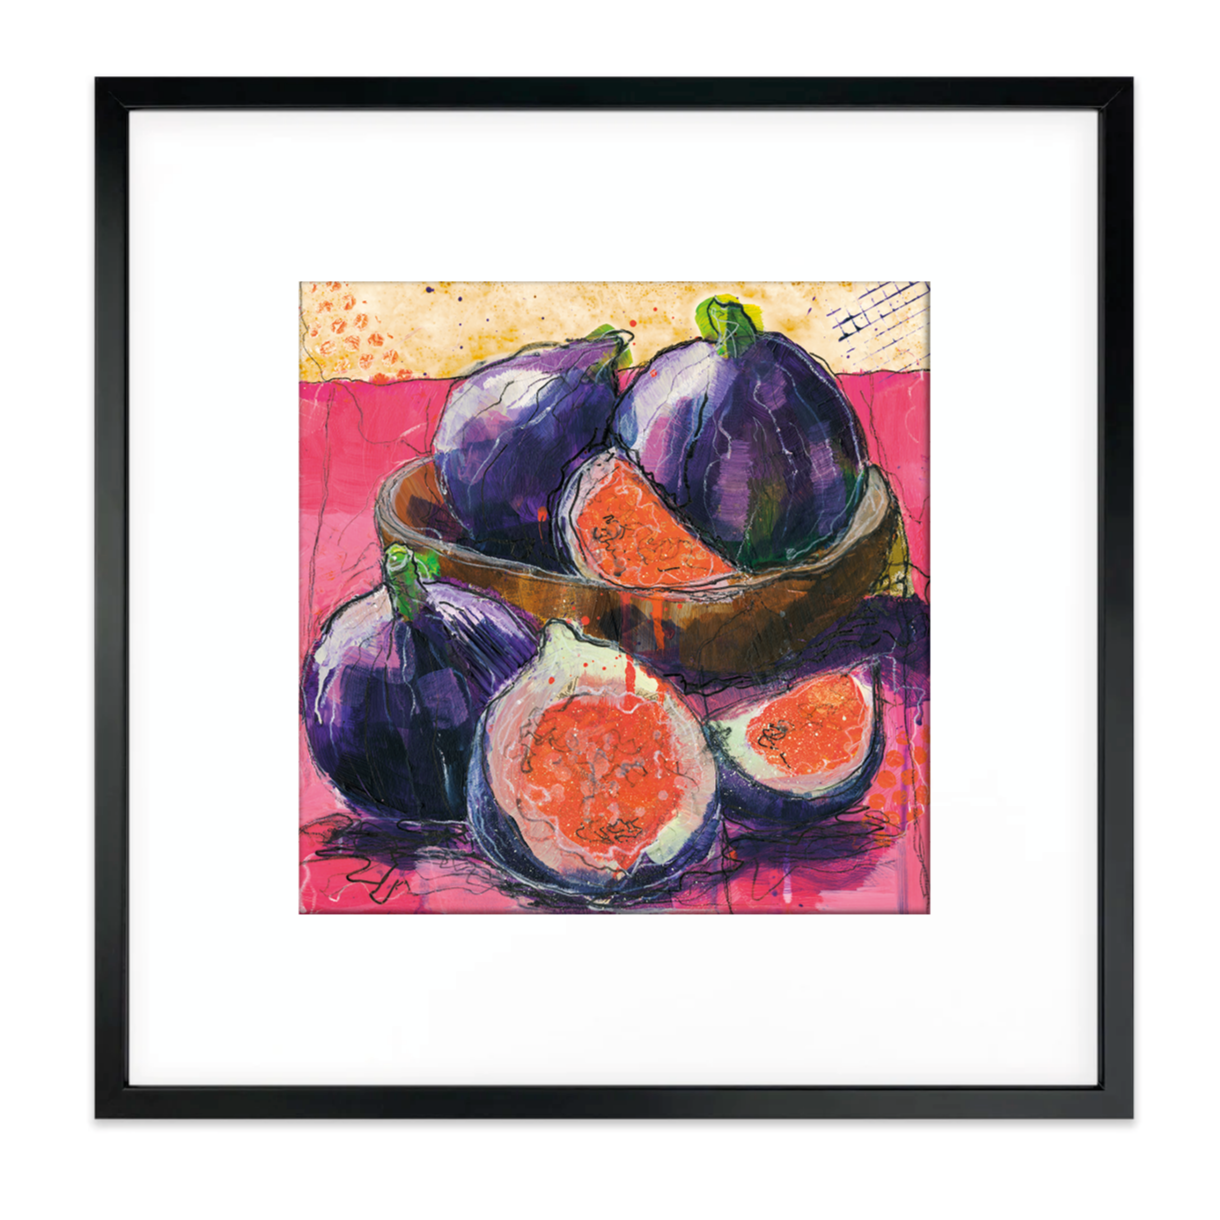 'Fruta - Pears' Contemporary Art Framed Print